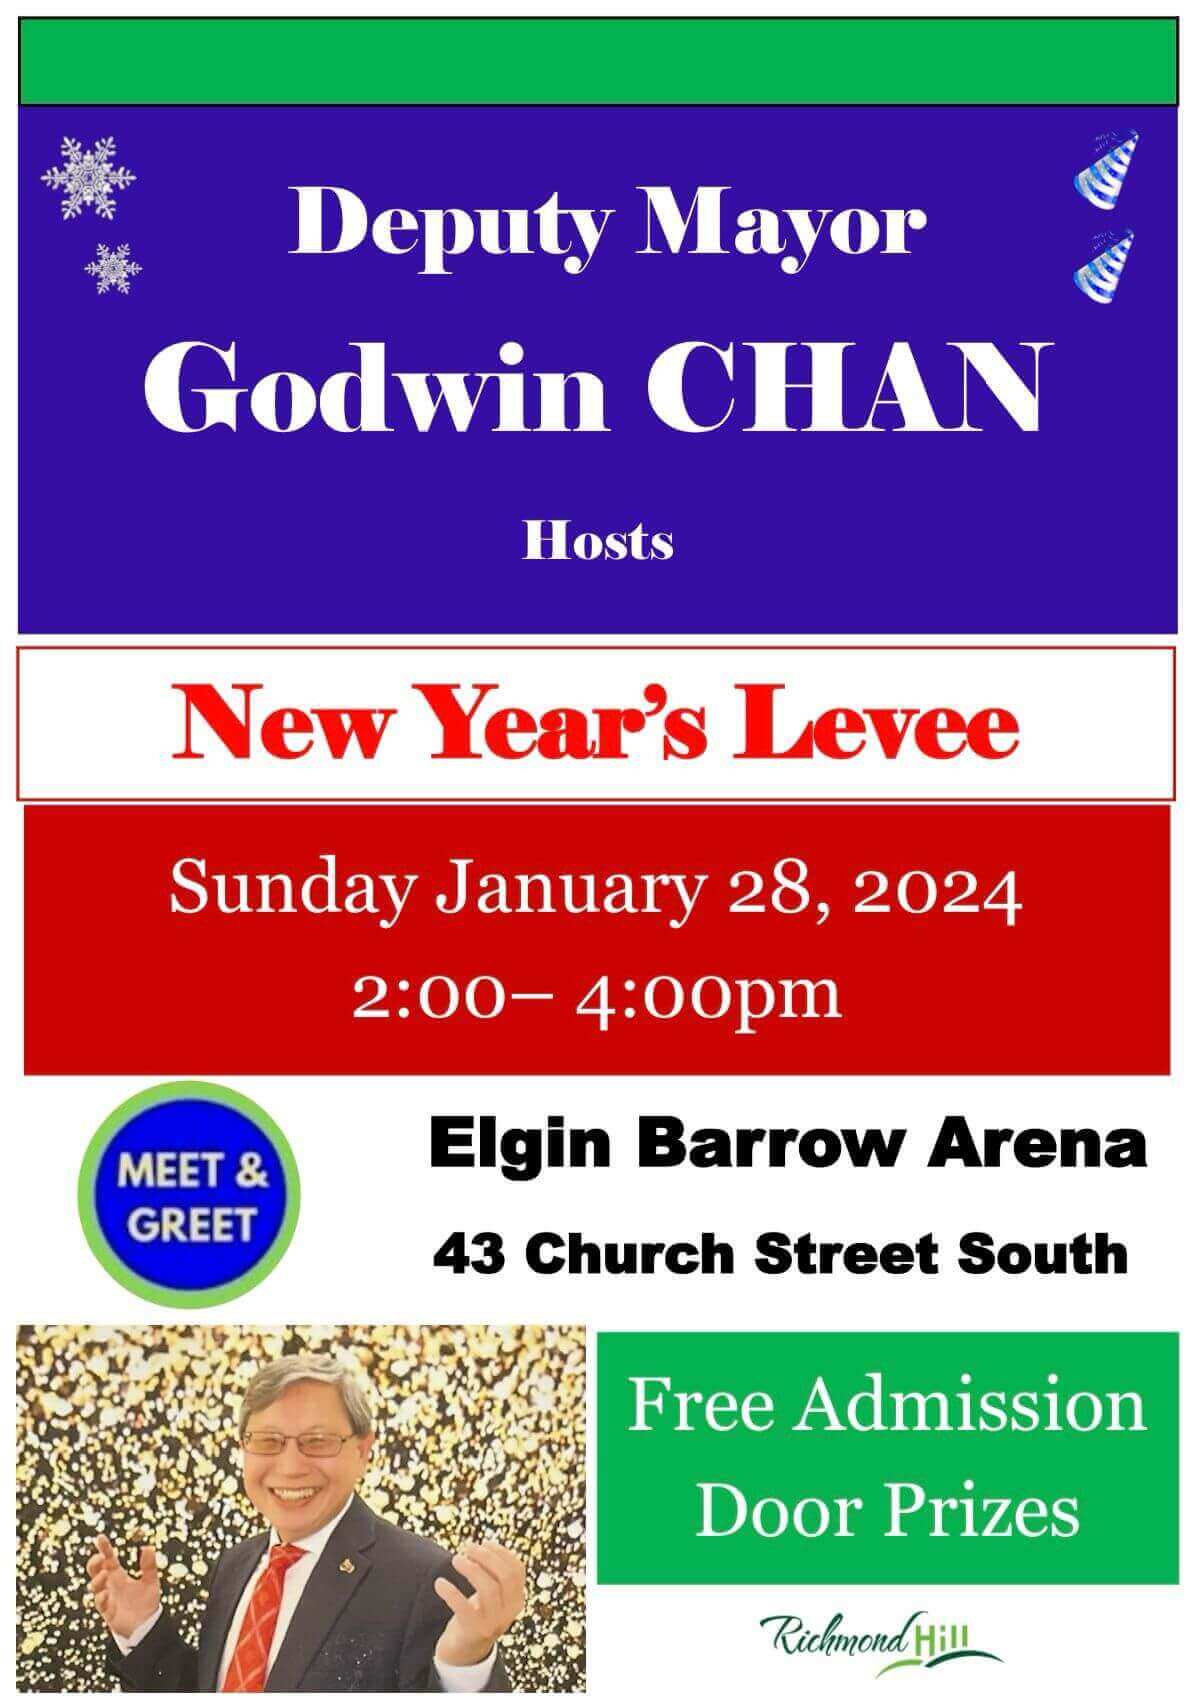 New Year Levee 2024 Godwin Chan